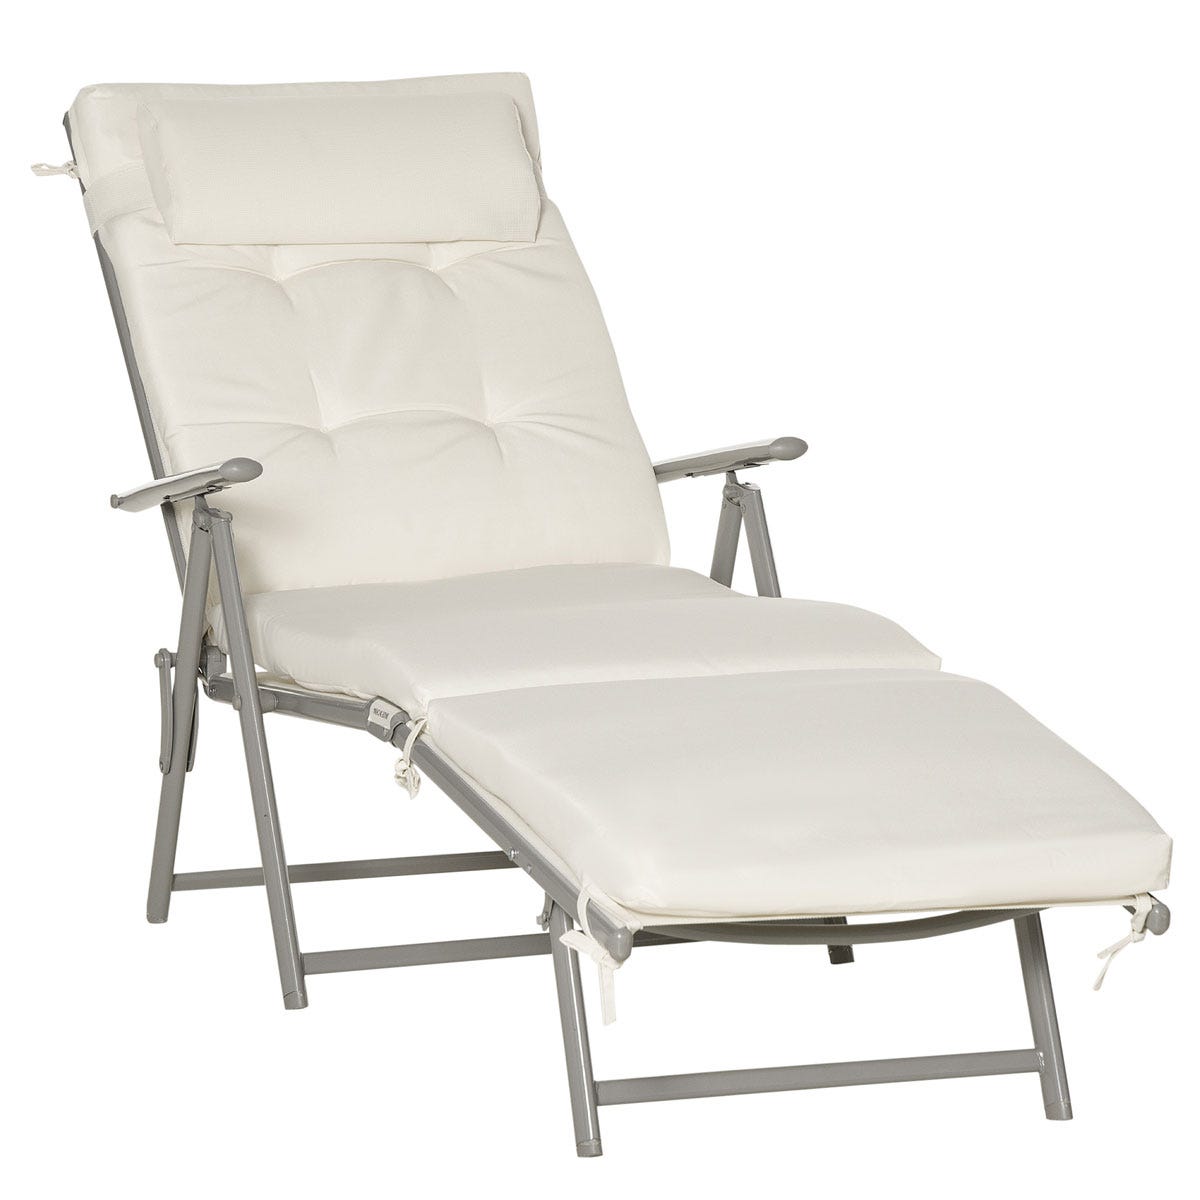 Outsunny Outdoor Patio Sun Lounger Garden Textilene Foldable Reclining Chair Pillow Adjustable Recliner with Cushion - Cream White